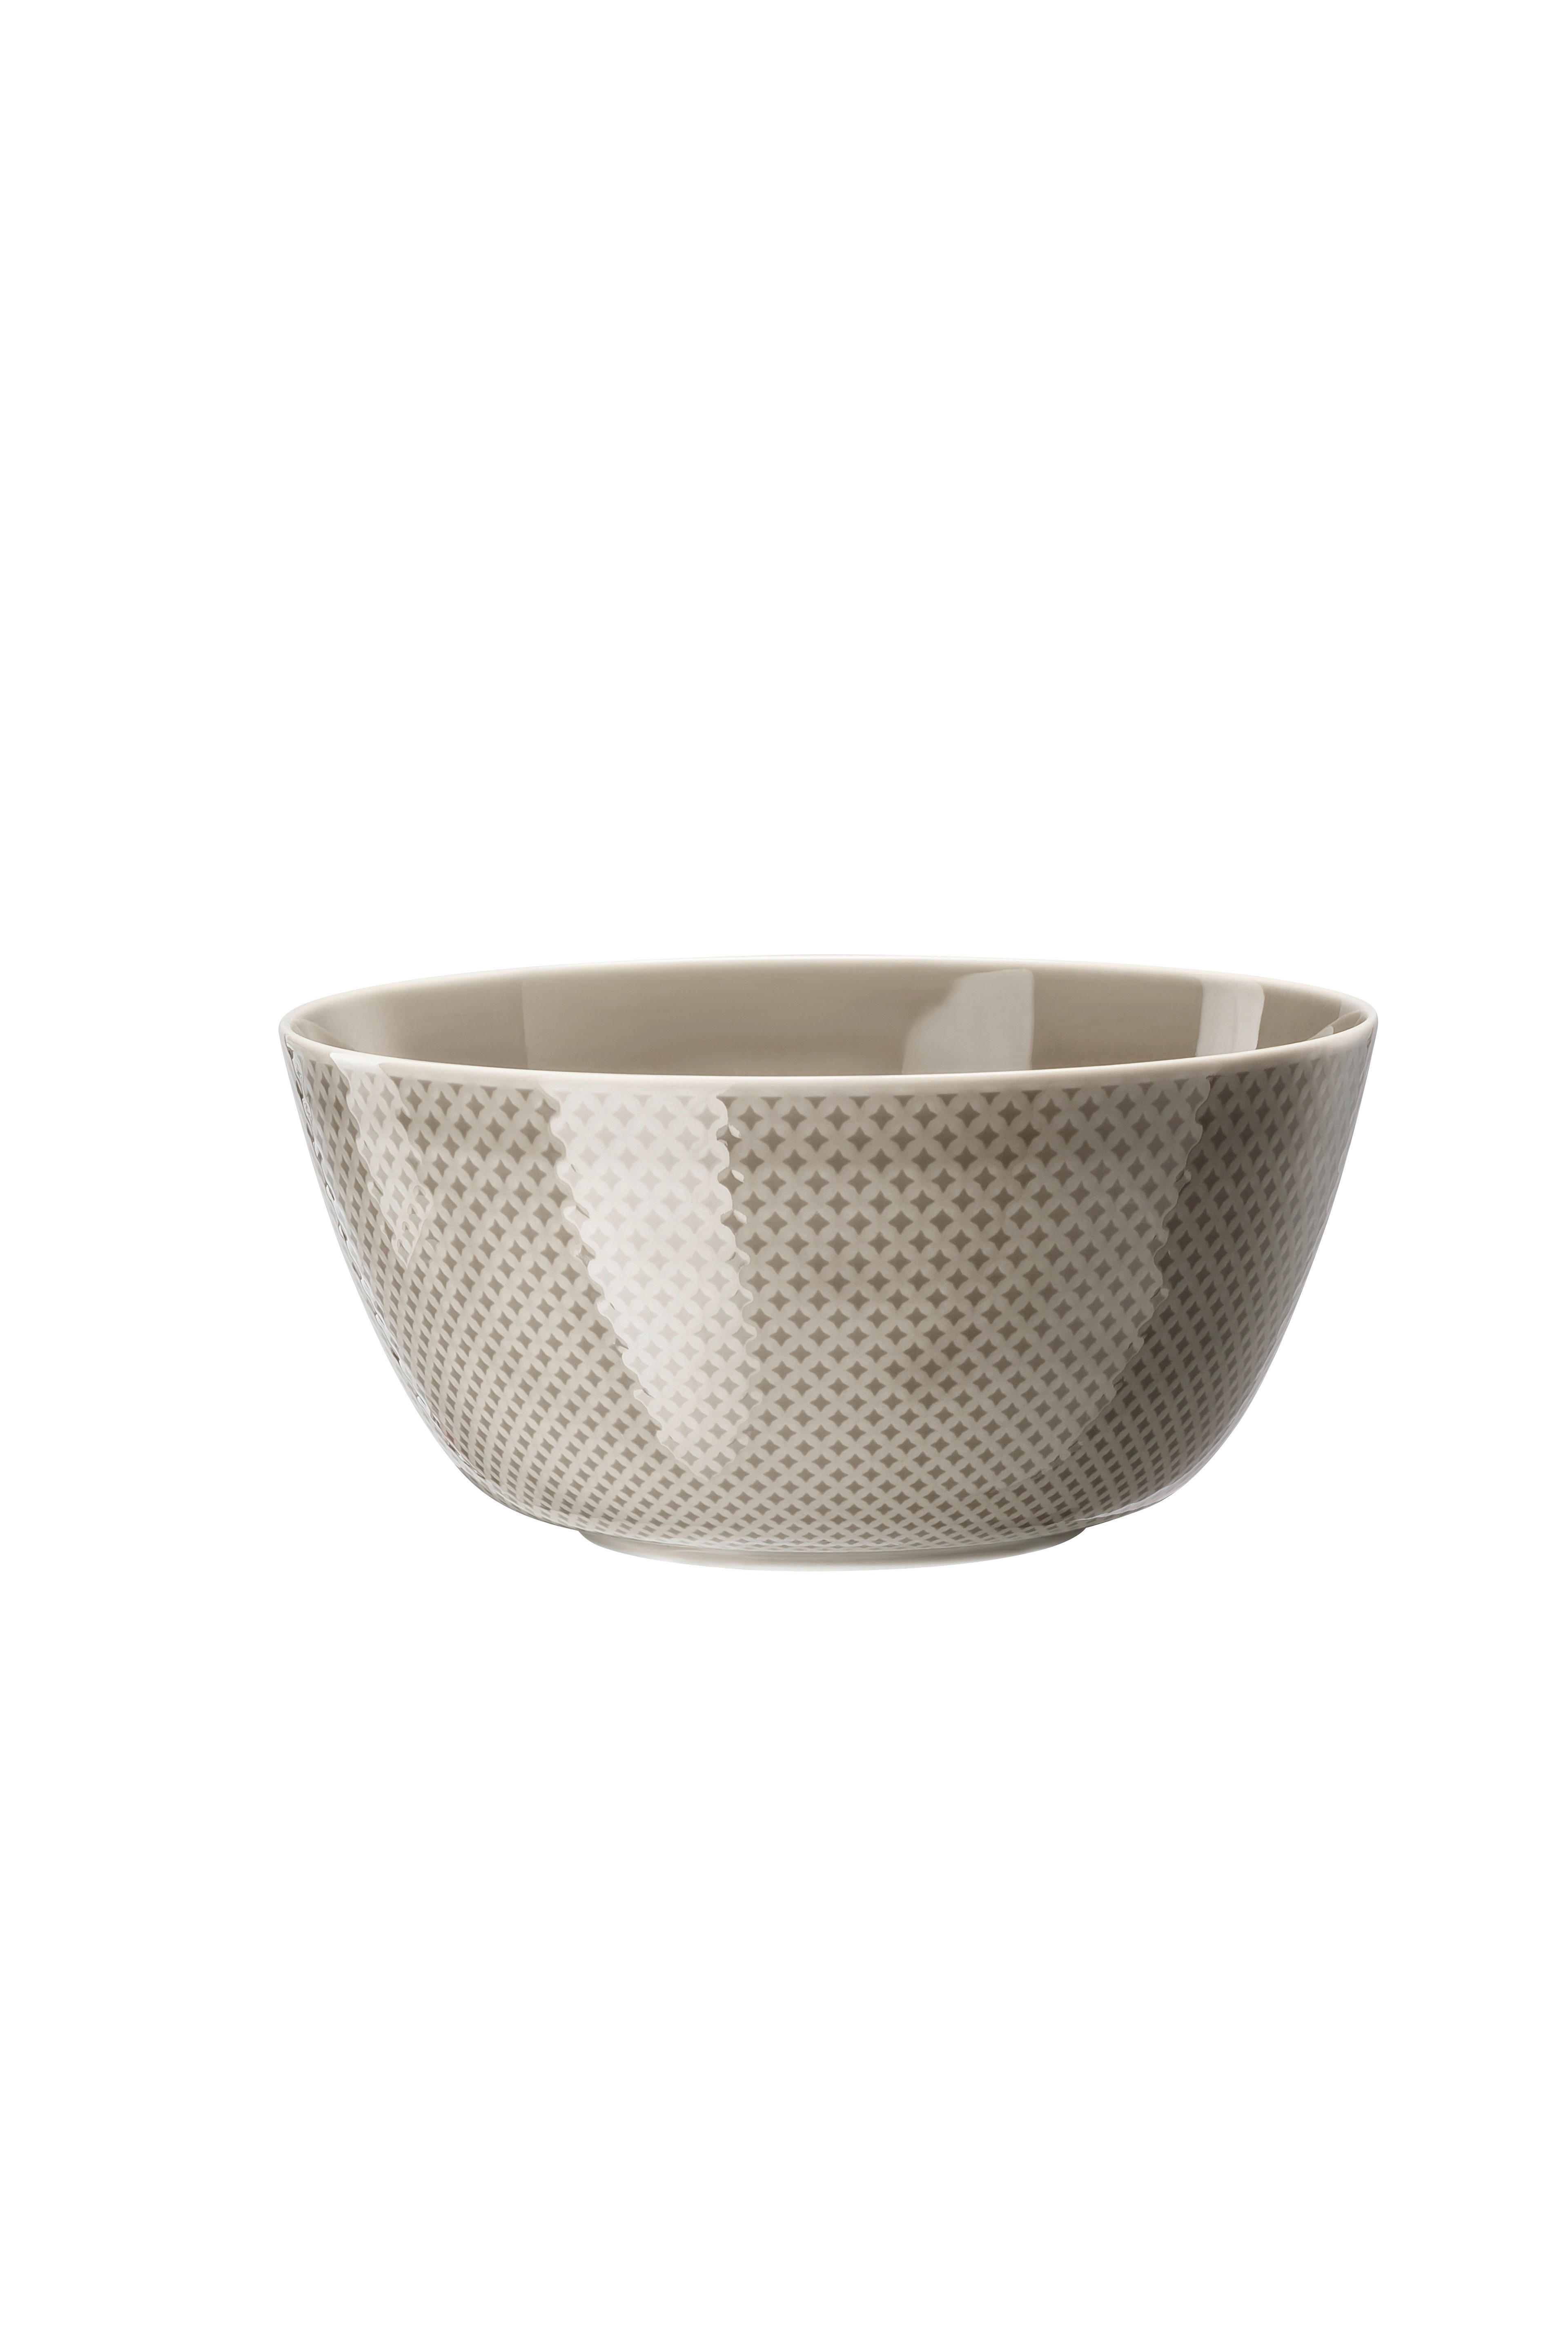 SCHÜSSEL Junto Pearl Grey  - Grau, LIFESTYLE, Keramik (23cm) - Rosenthal